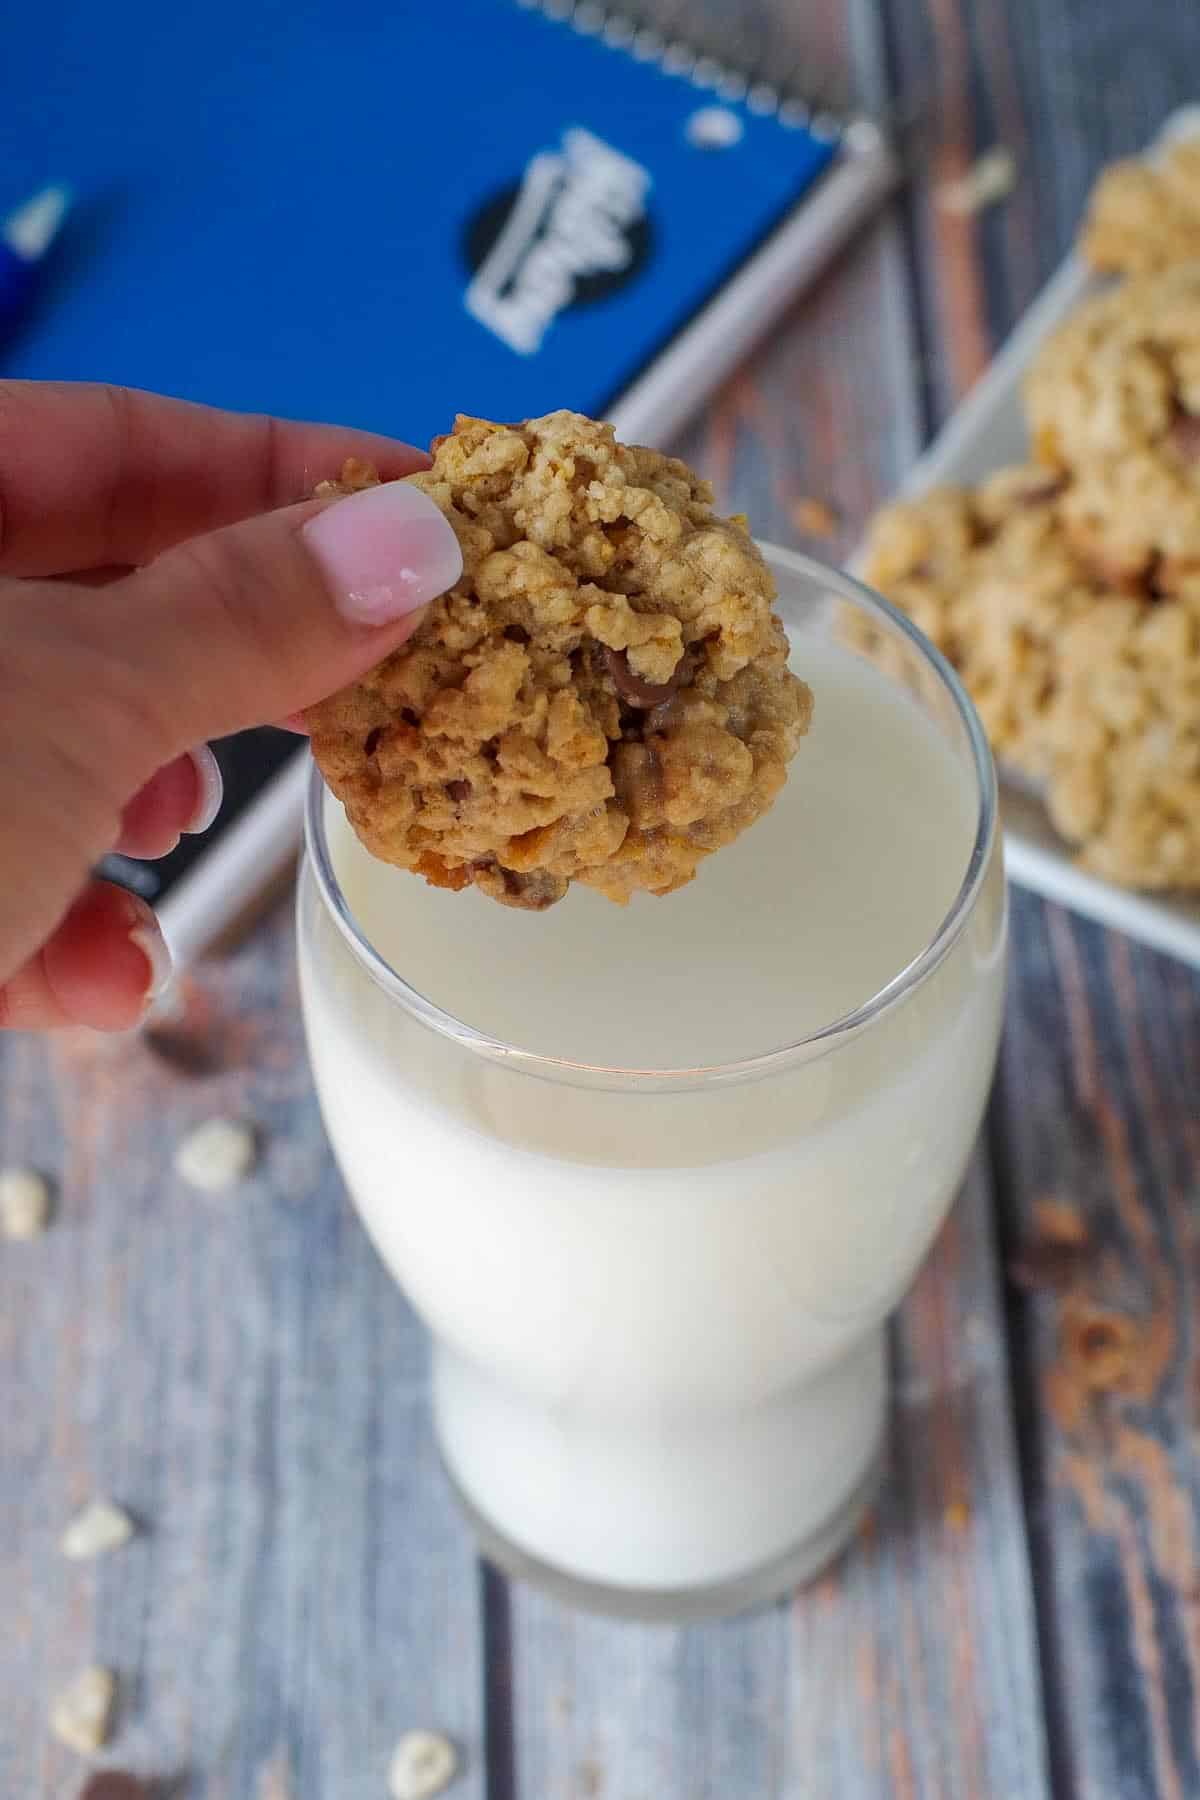 School Day cereal cookies being held over glass of milk with plate of cookies, milk and school binder in background